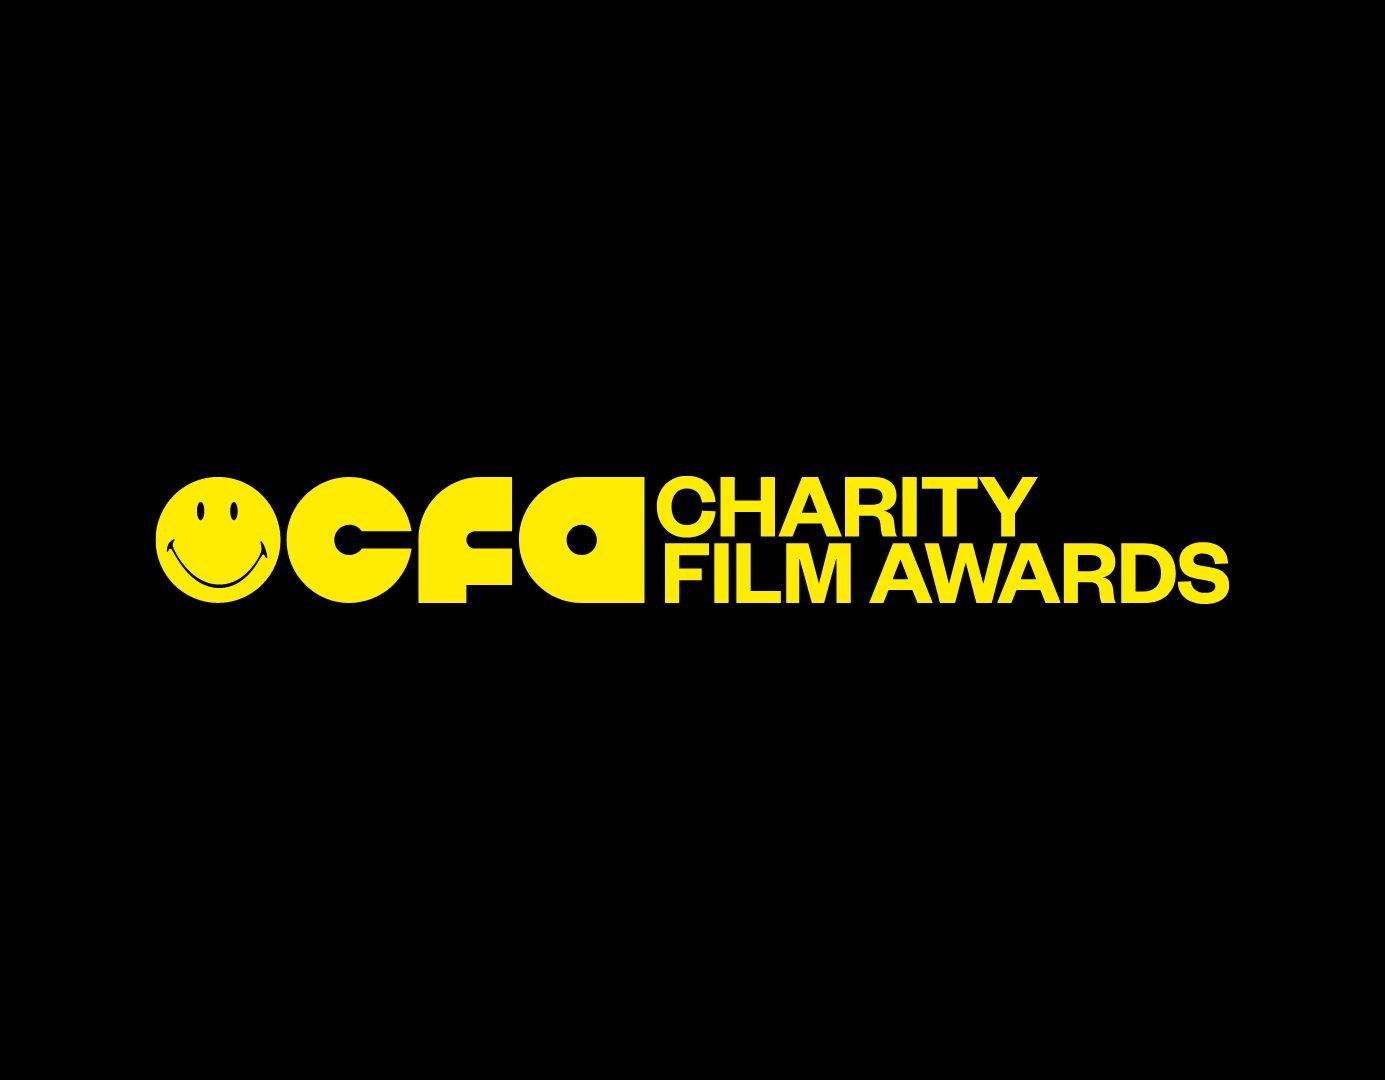 Charity film awards hero image